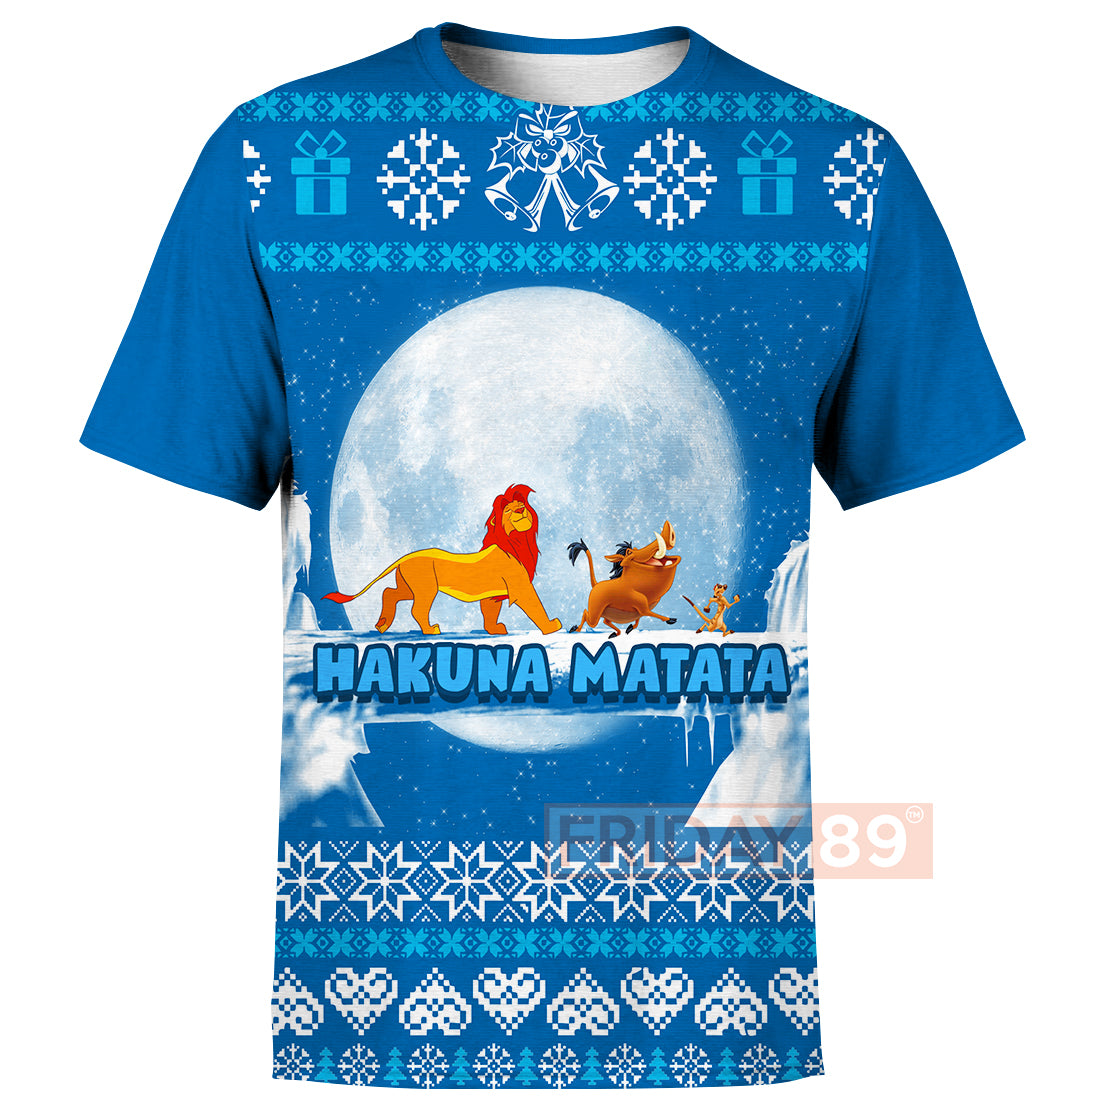 Unifinz LK T-shirt Hakuna Matata Christmas T-shirt Amazing DN LK Hoodie Sweater Tank 2025